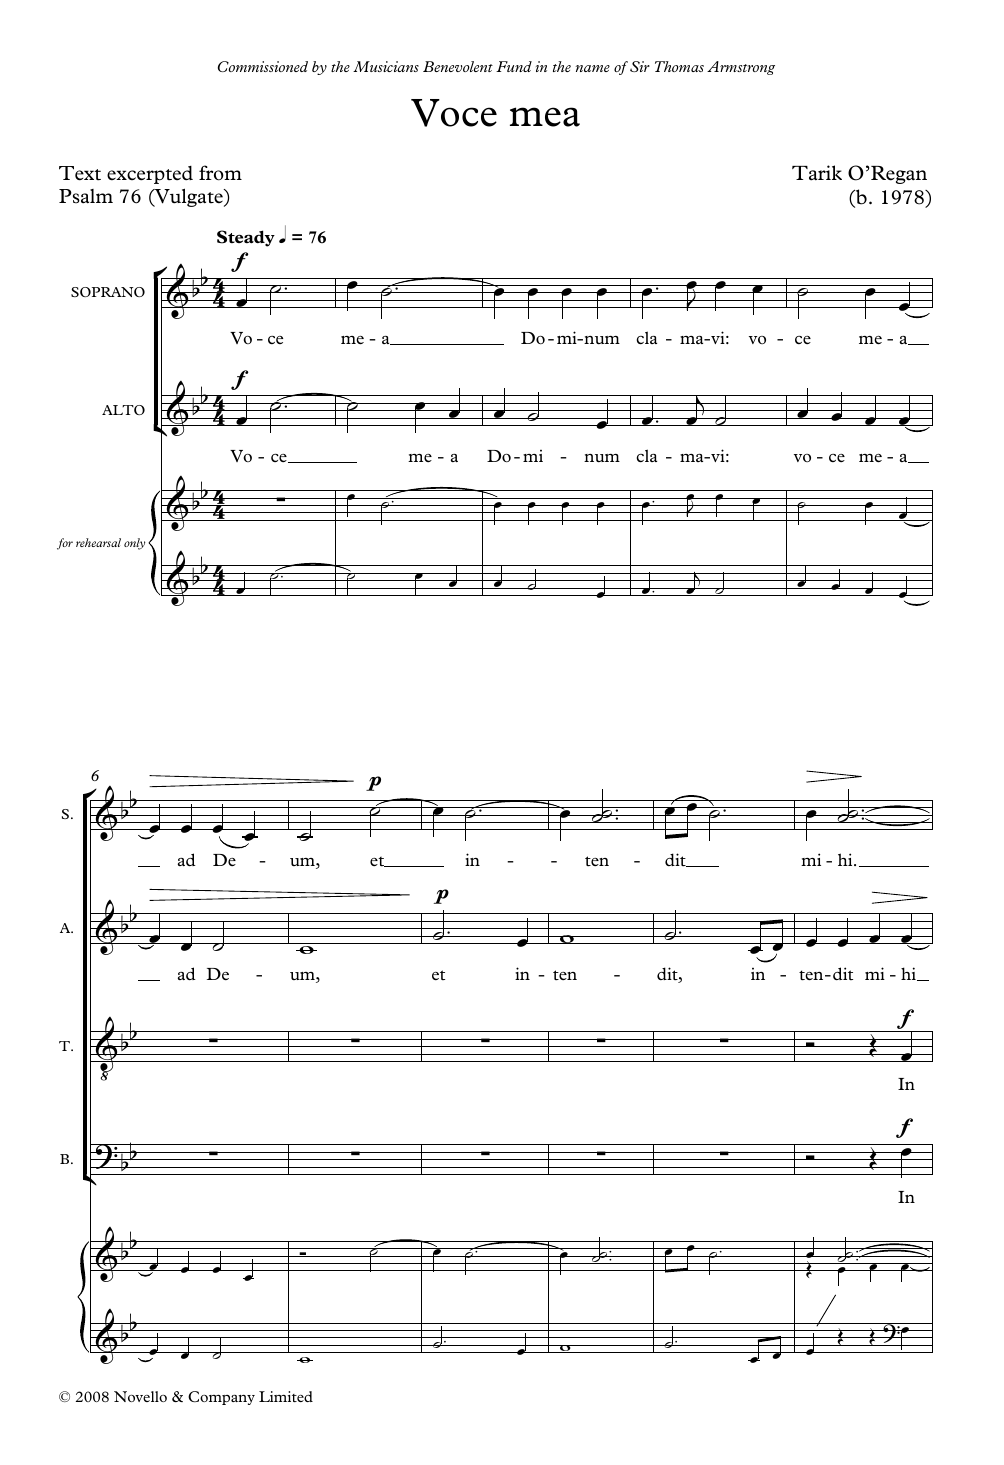 Tarik O'Regan Voce Mea Sheet Music Notes & Chords for SATB Choir - Download or Print PDF